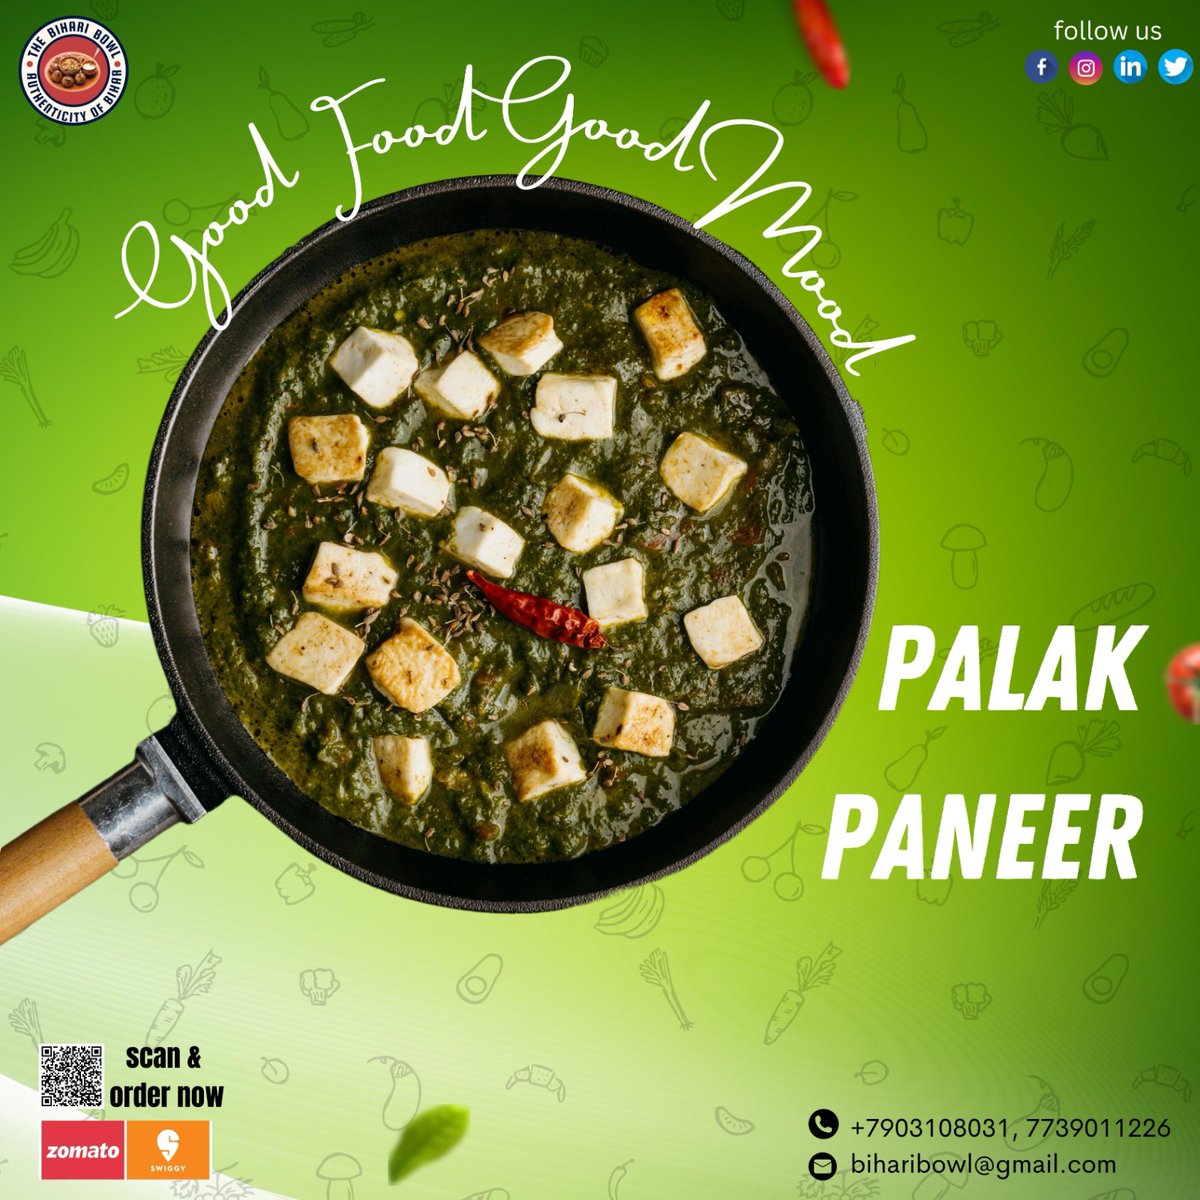 Good Food Good Mood
PALAK PANEER

ORDER NOW 😋
From the kitchen that cares about you
Zomato & Swiggy
📞 Call us now: +91 7903108031, 7739011226
📍 Visit us:- Plot No 308, Chhalera, Gali No 3, Near SRS Value Bazar, Sector 44, Noida, Uttar Pradesh 201303
#palakpaneer #thebiharibowl